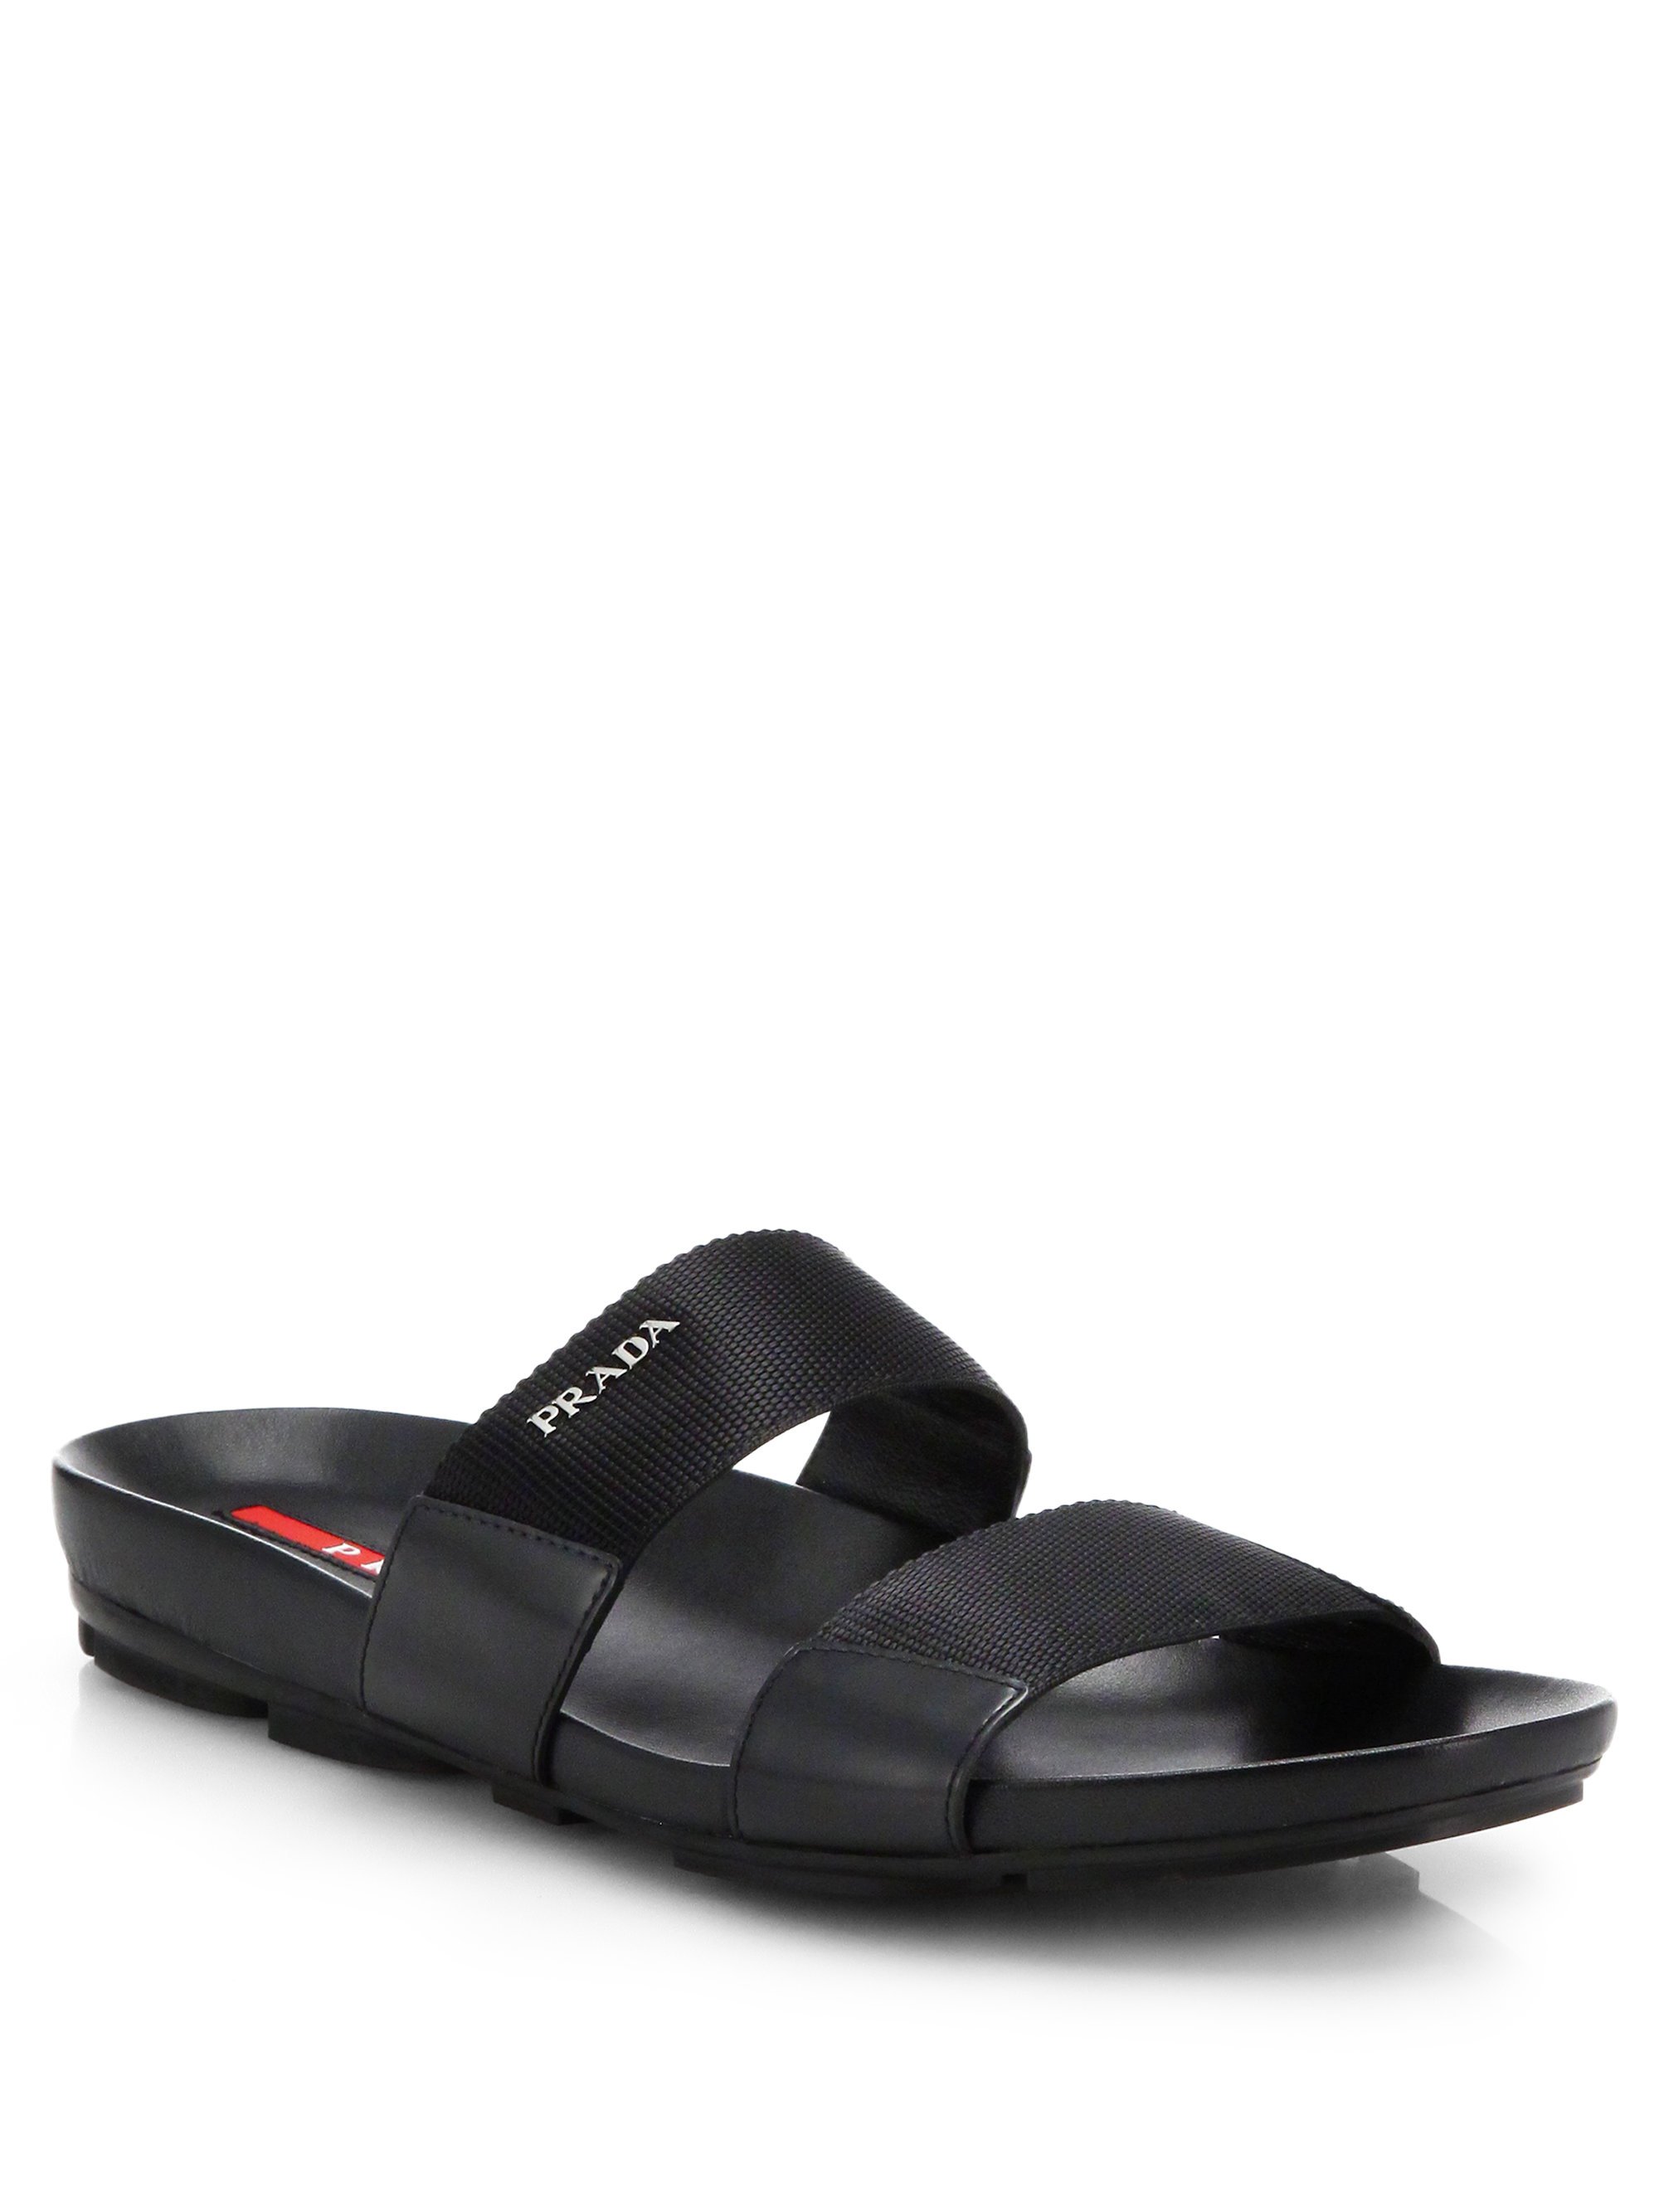 Prada Double-Strap Nylon Sandals in Black for Men - Lyst